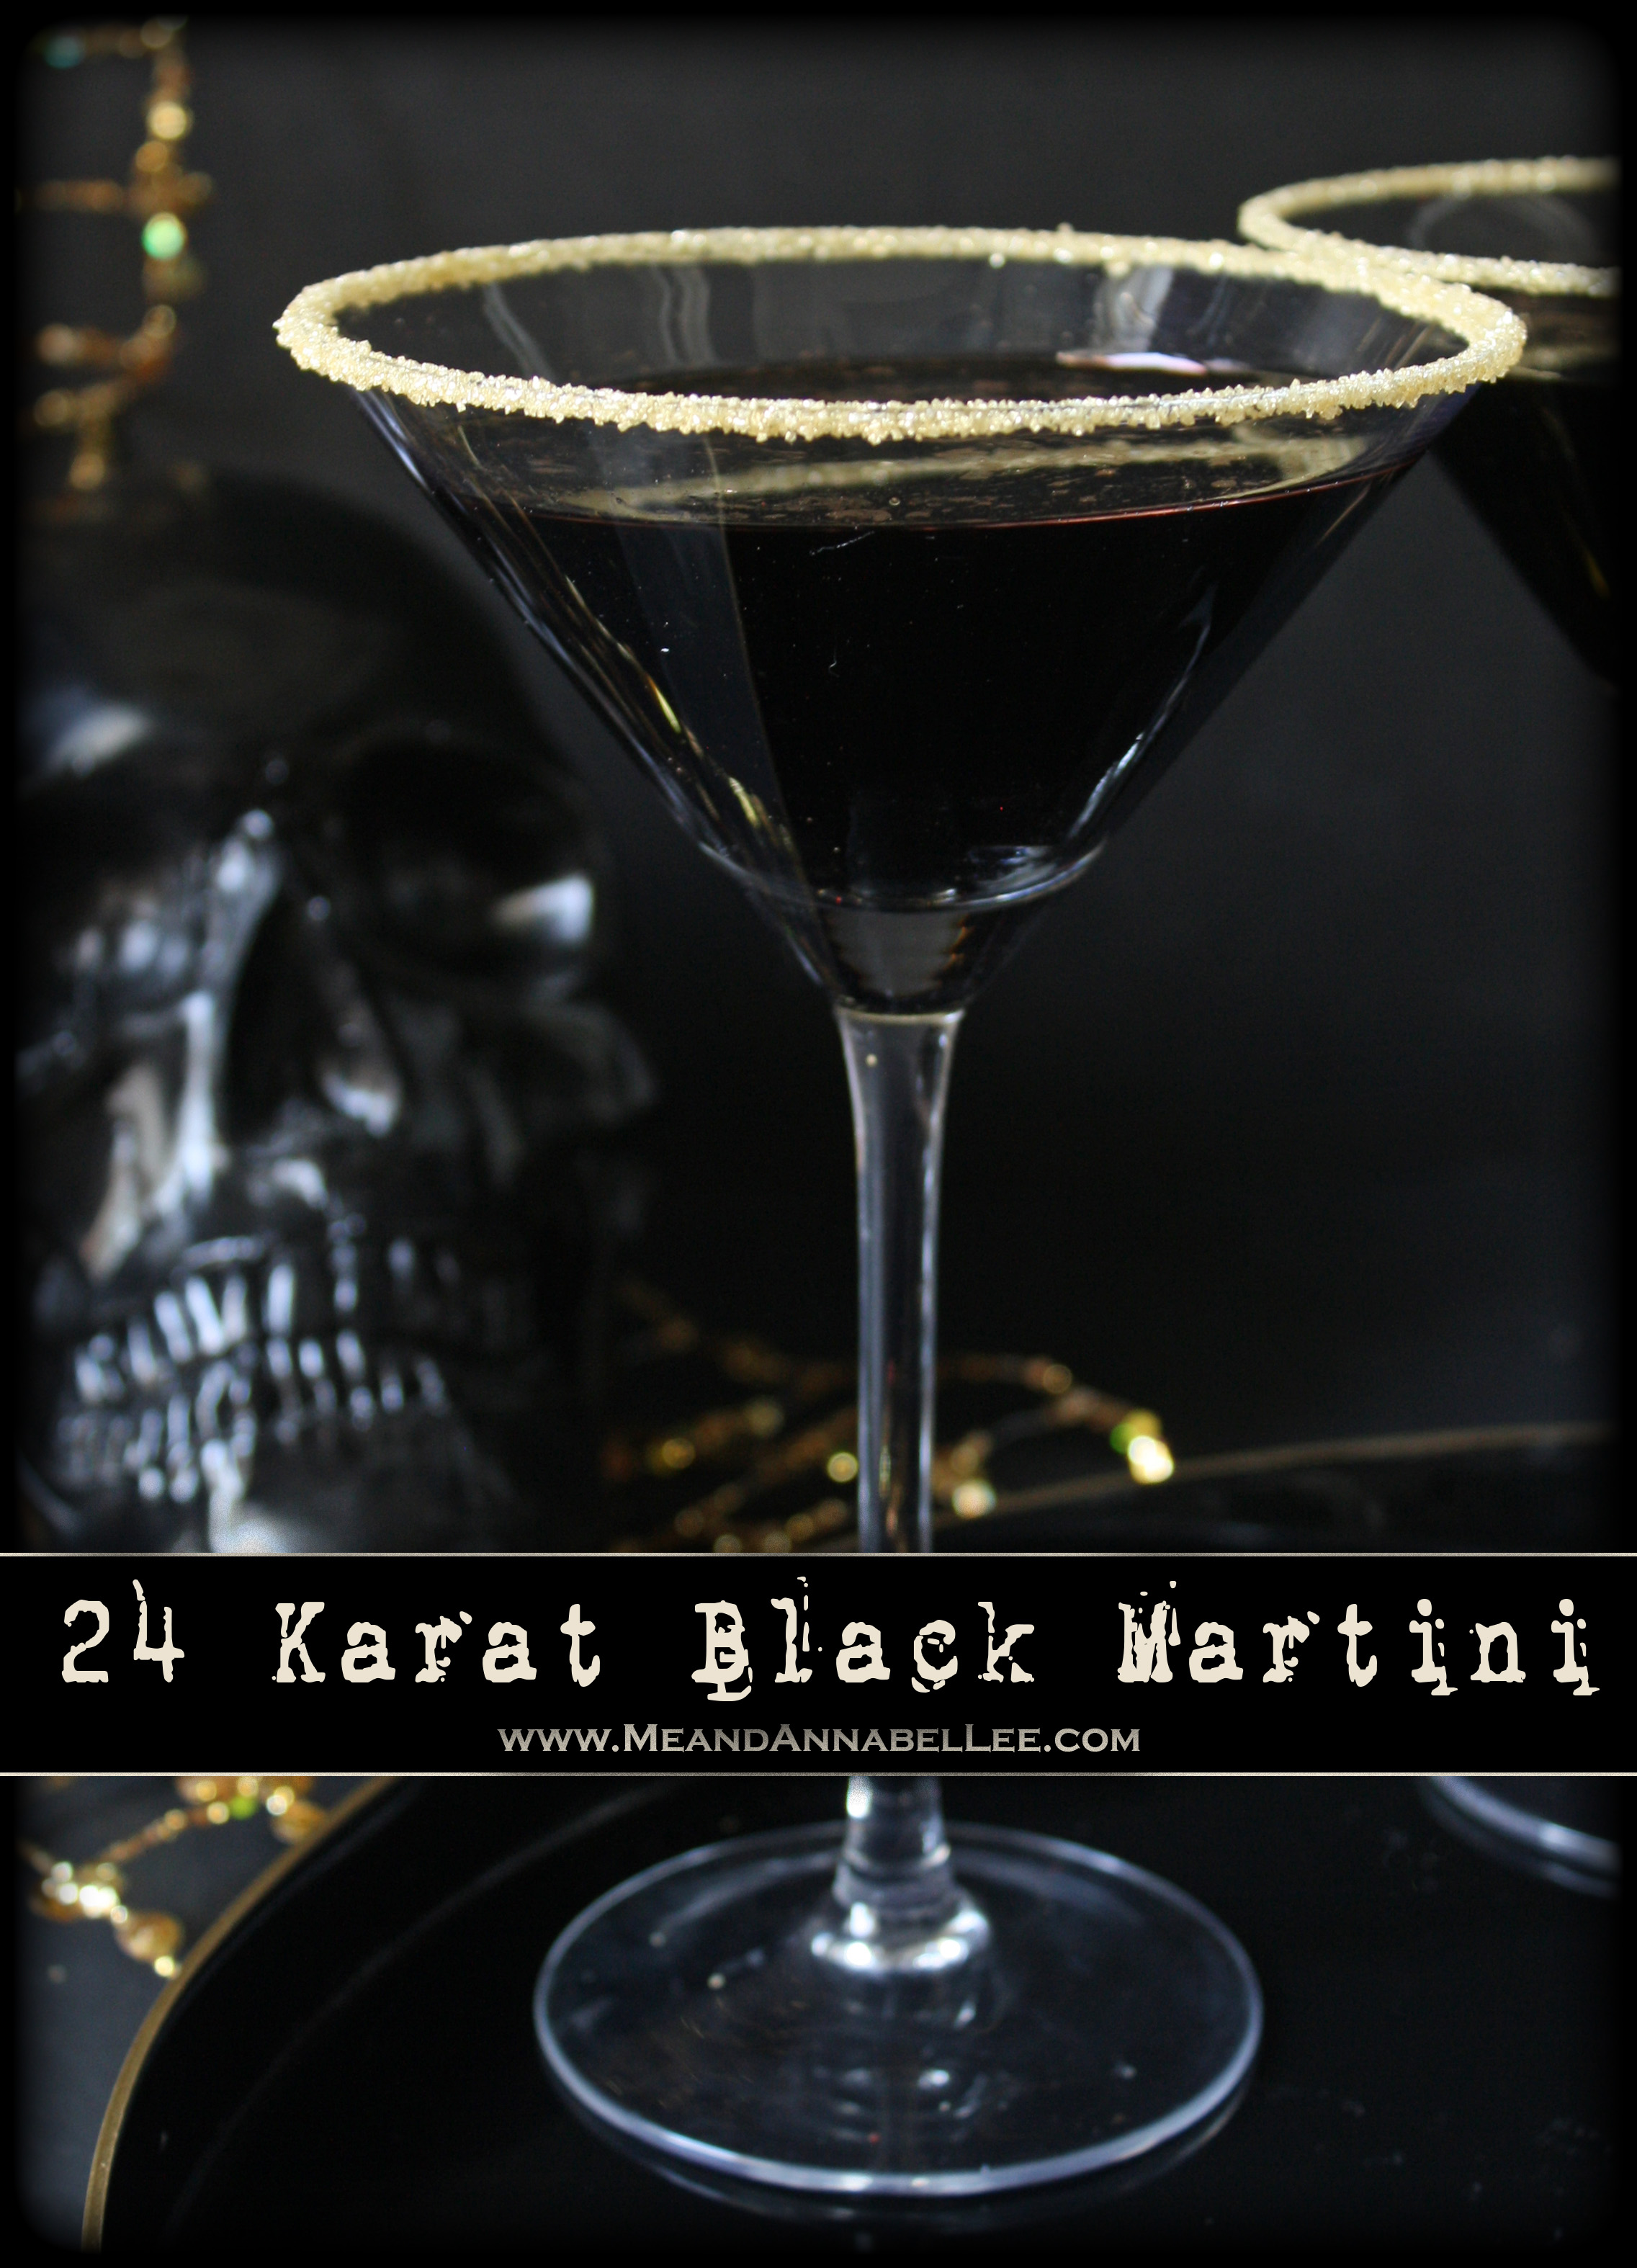 Twenty Four Karat Black Martini